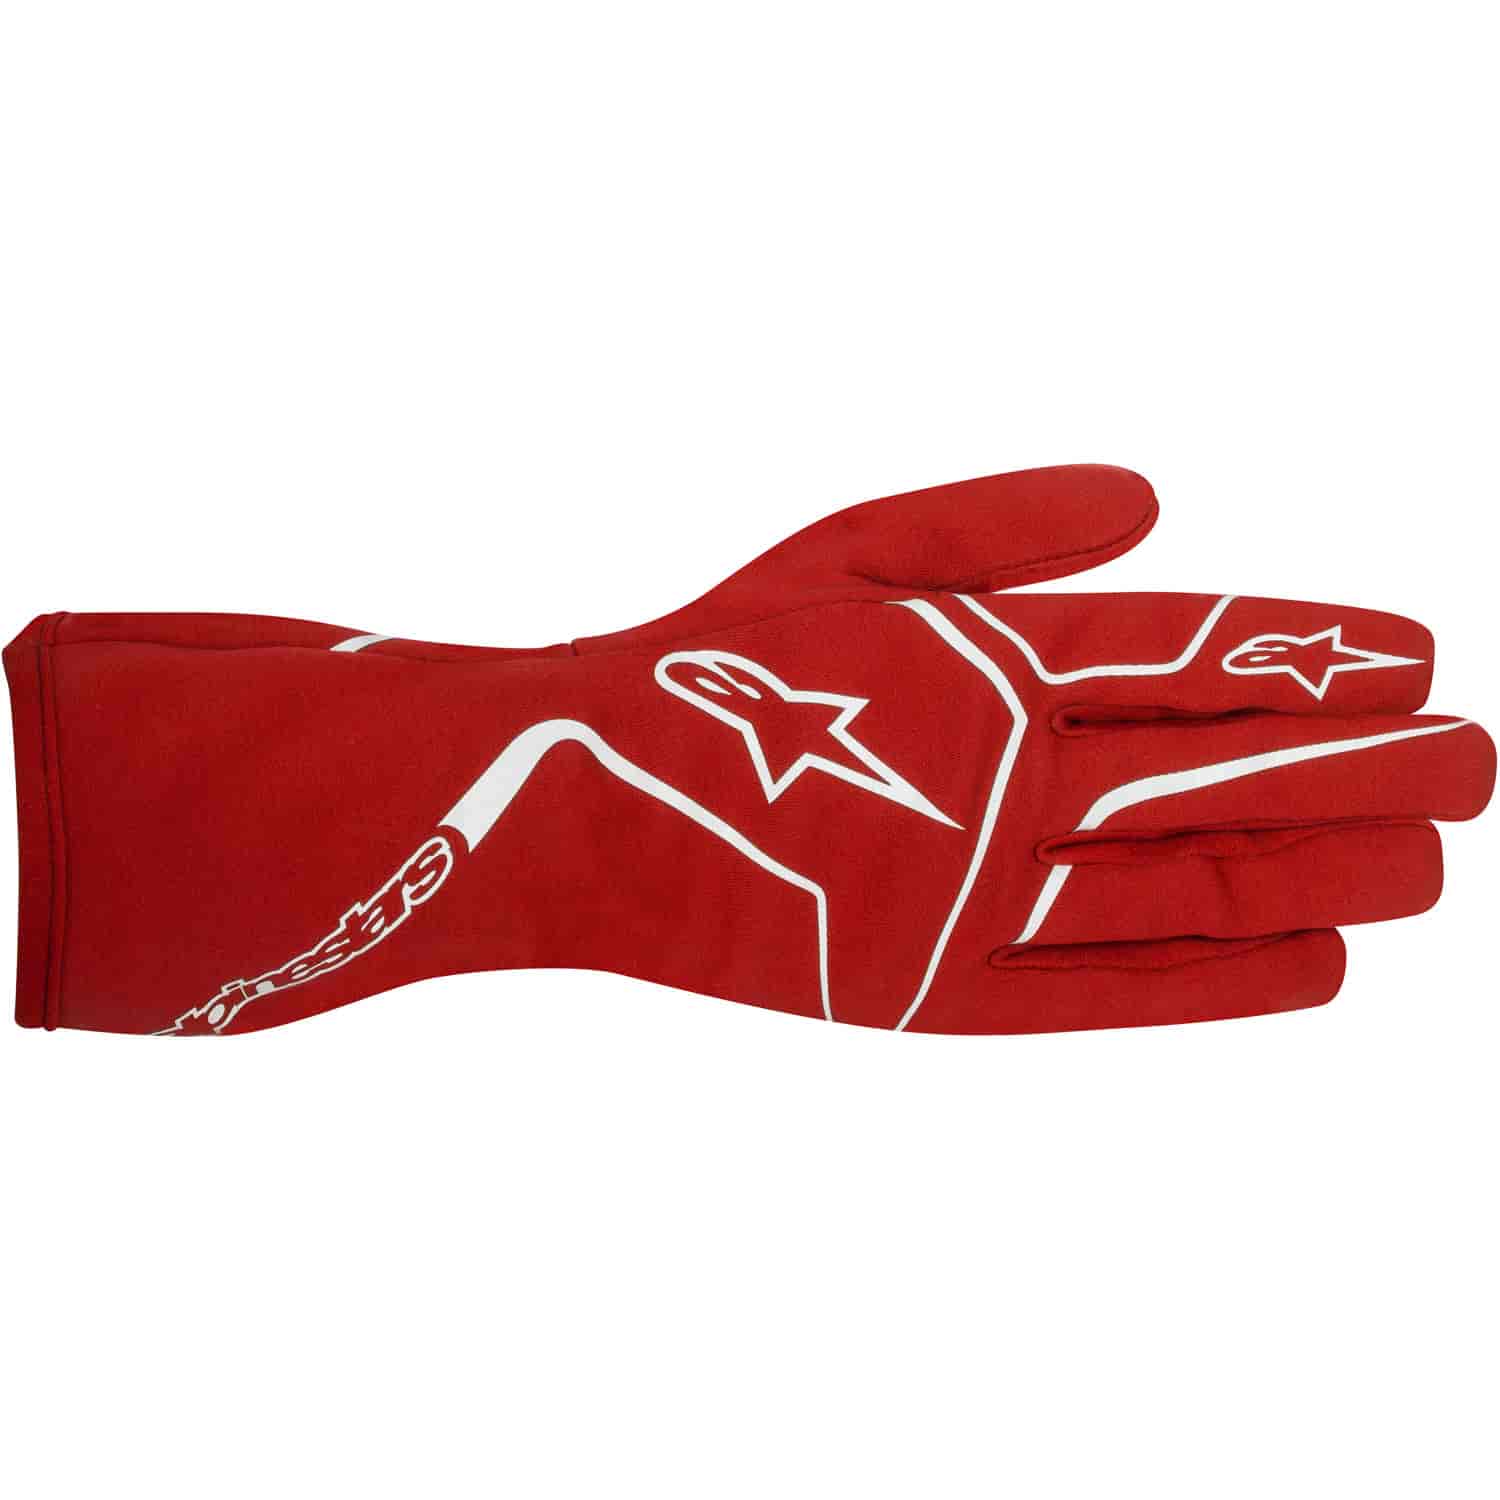 Tech 1-K Race Gloves Red